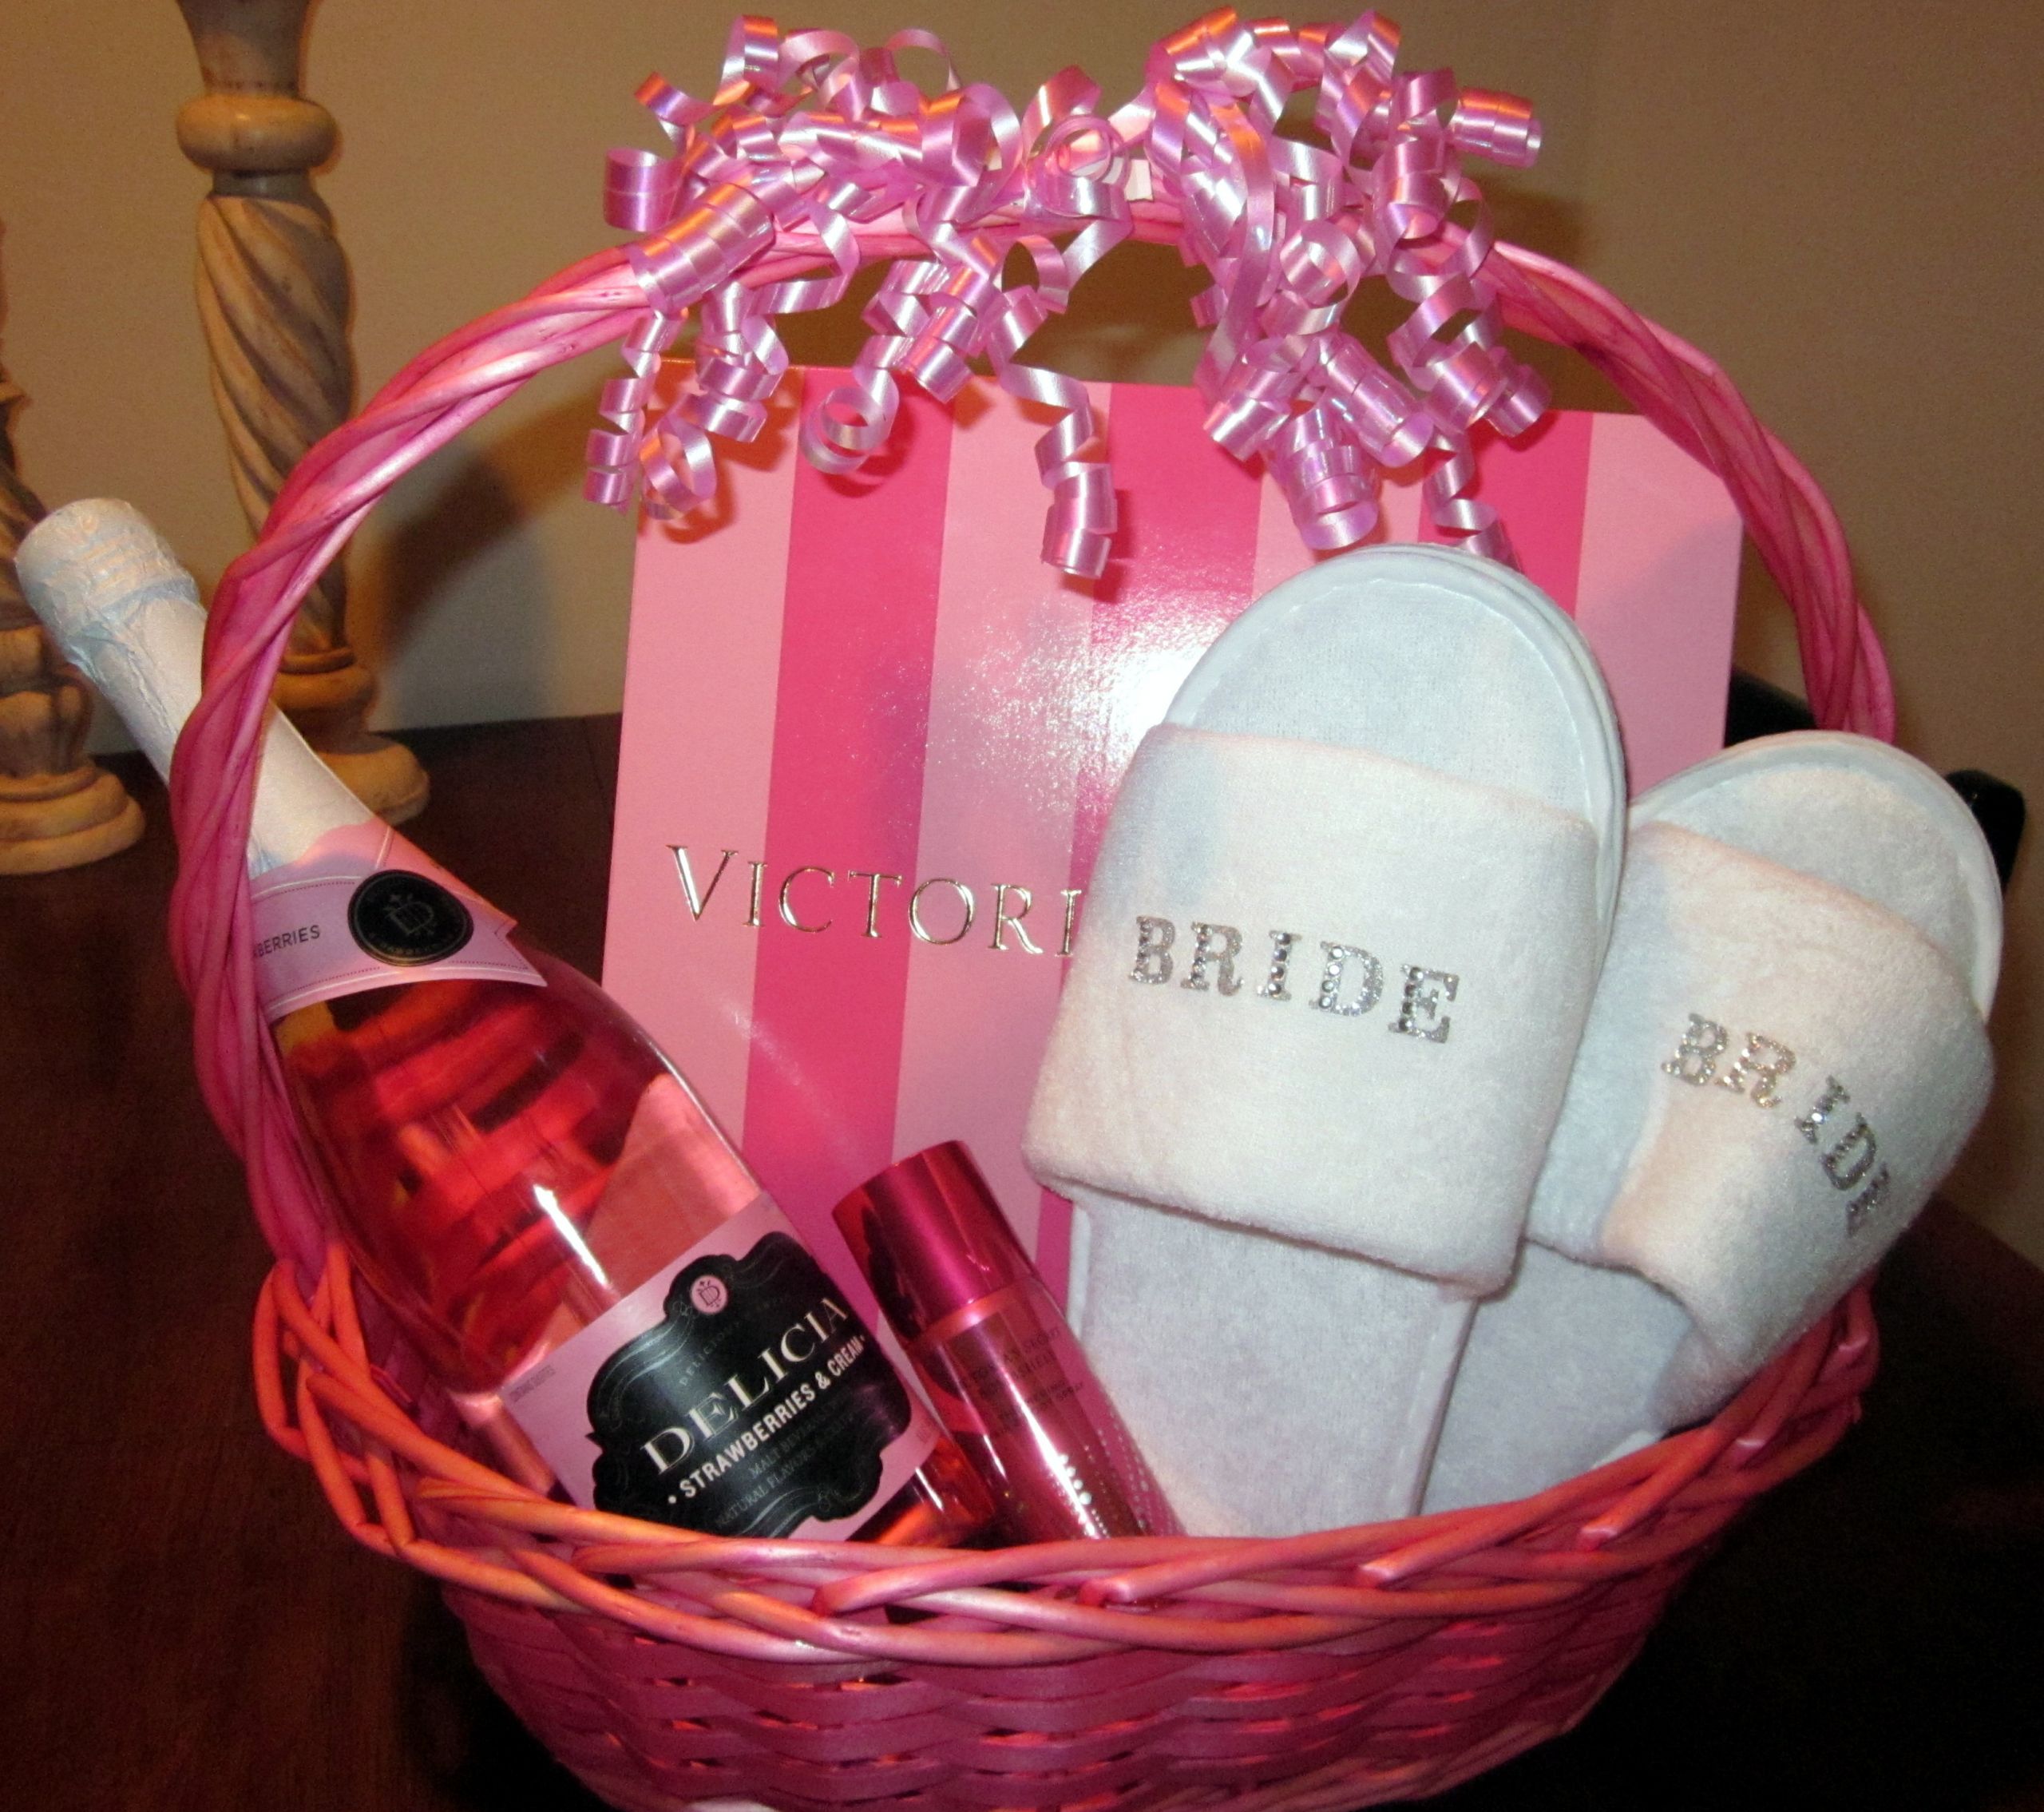 Gift Basket Ideas For Bridal Showers
 Bridal Shower Gift Ideas She ll Adore TrueBlu